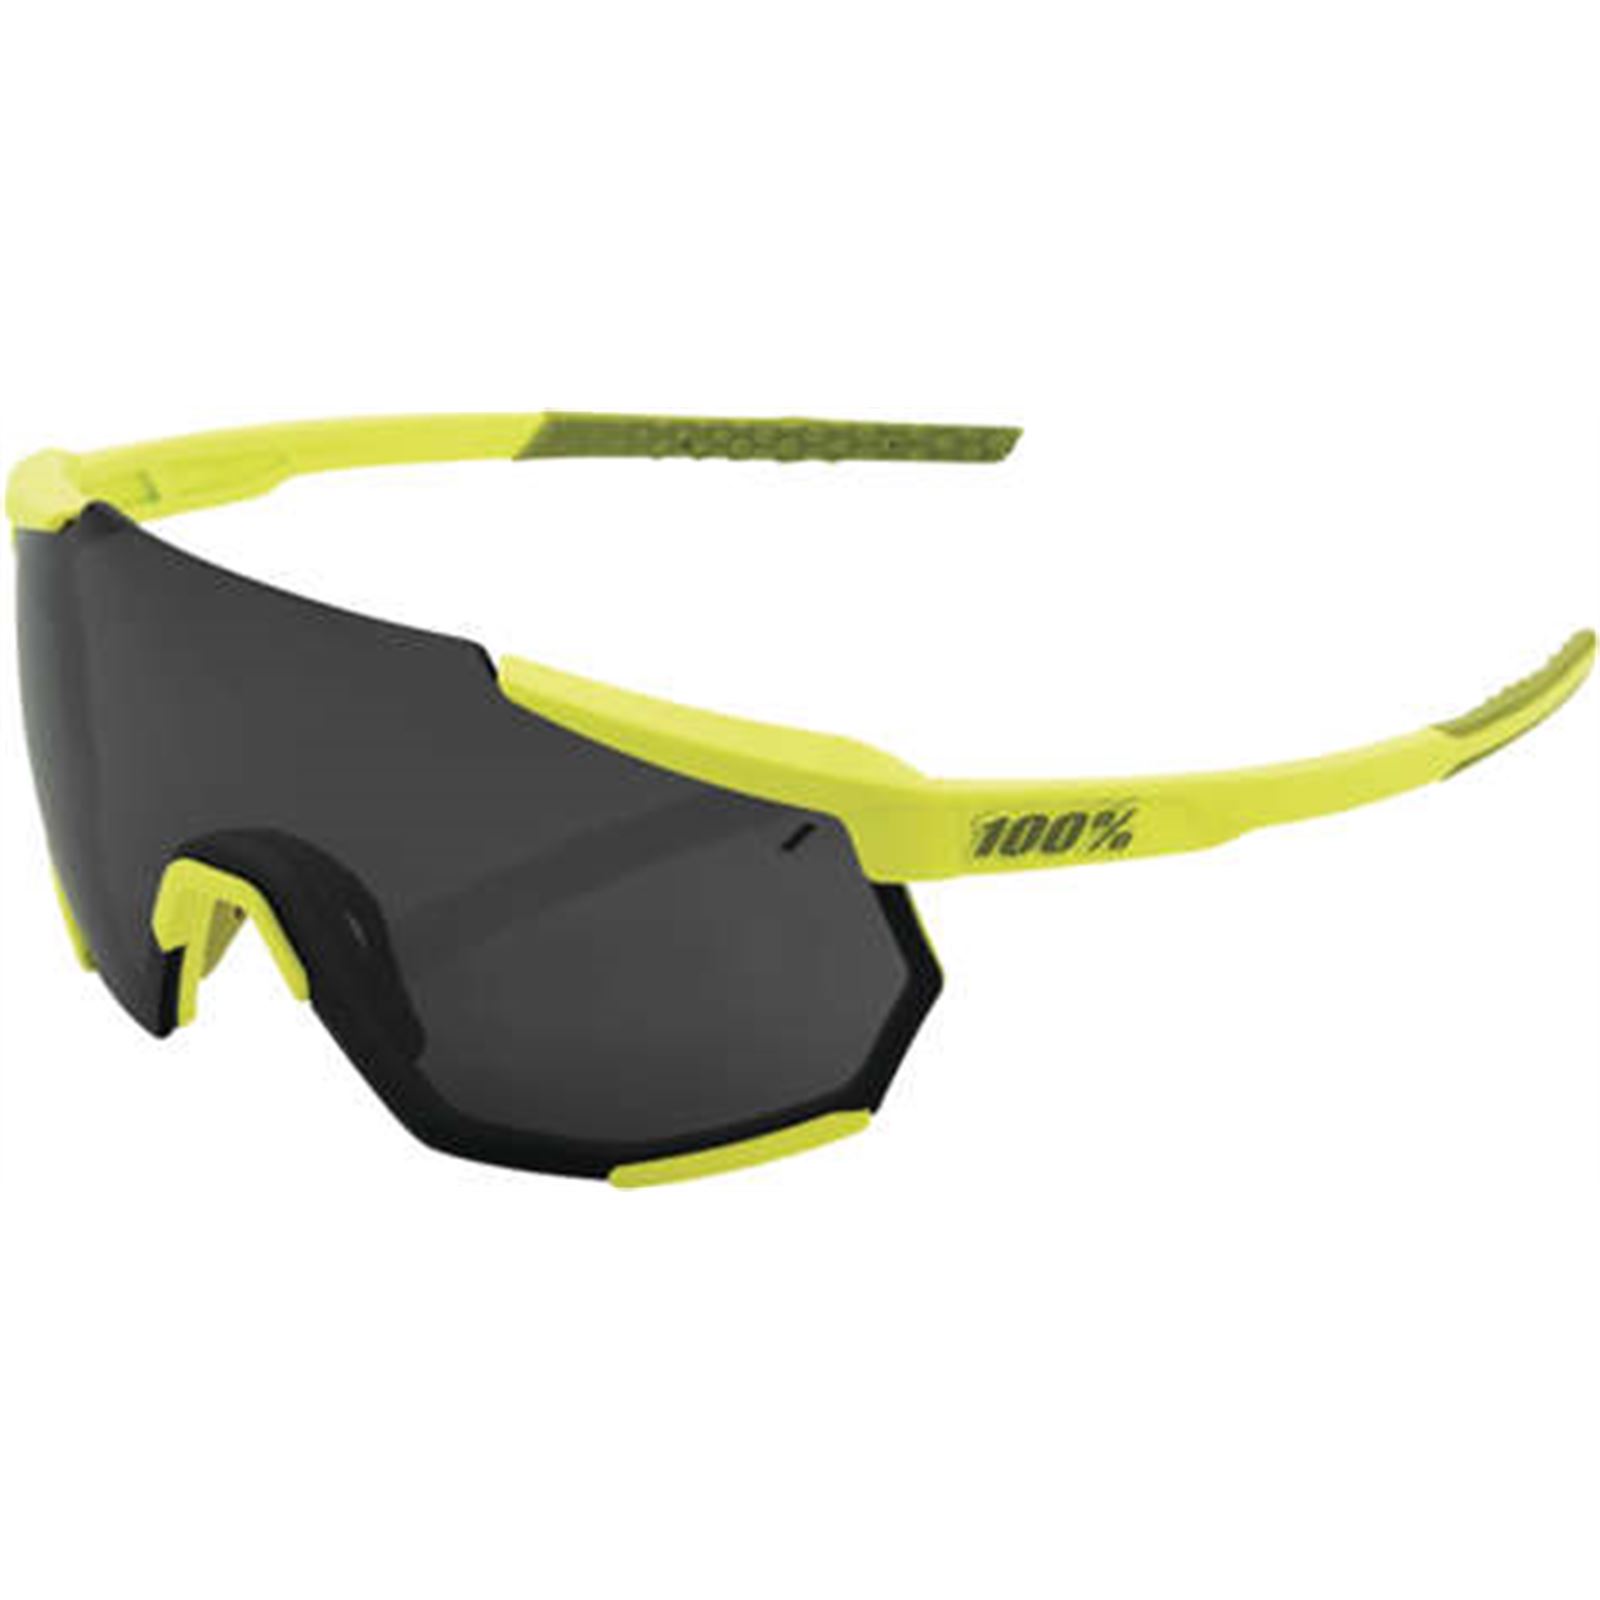 100% Racetrap Sunglasses - Yellow - Black Mirror Lens